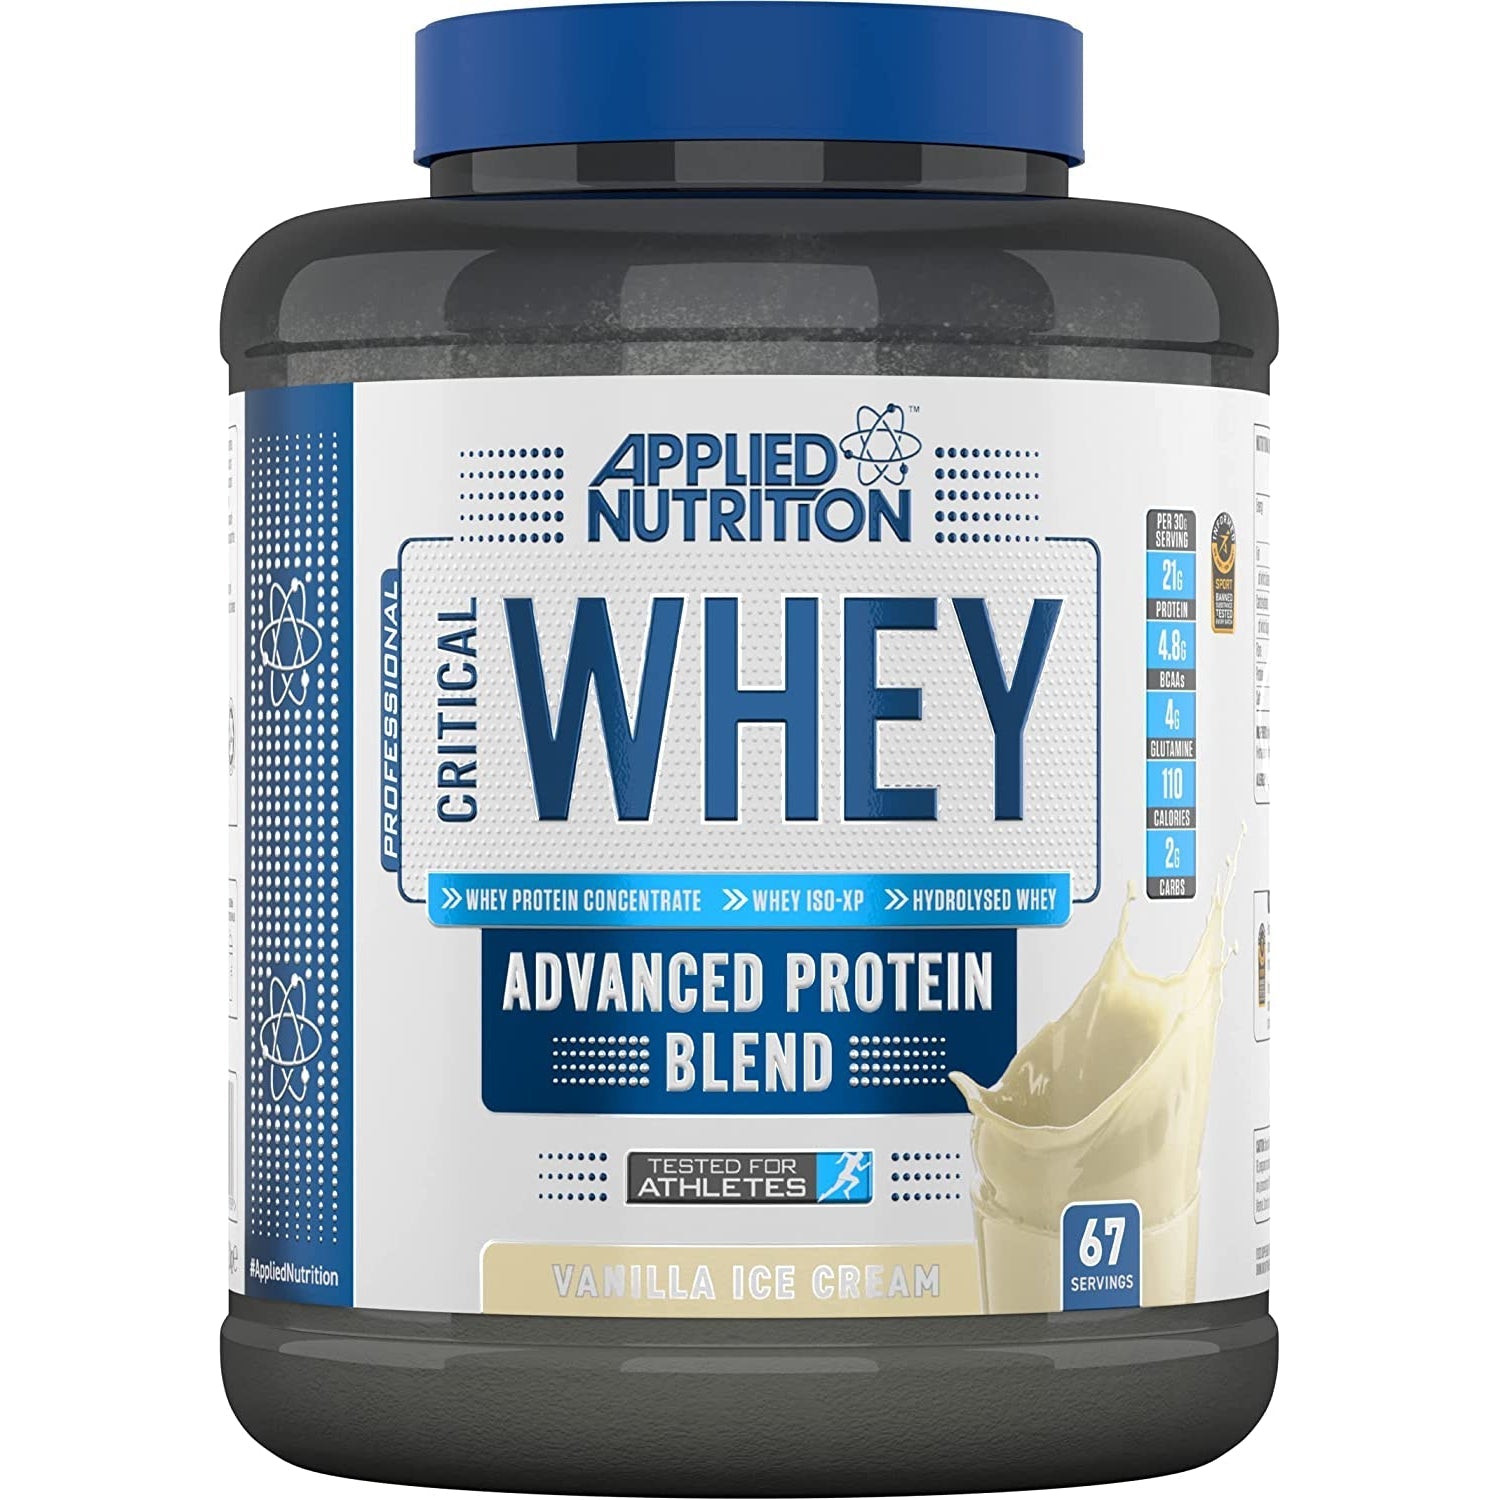 Applied Nutrition Critical Whey Advanced Protein Blend Vanilla 21g Protein 2g Carbs 2KG